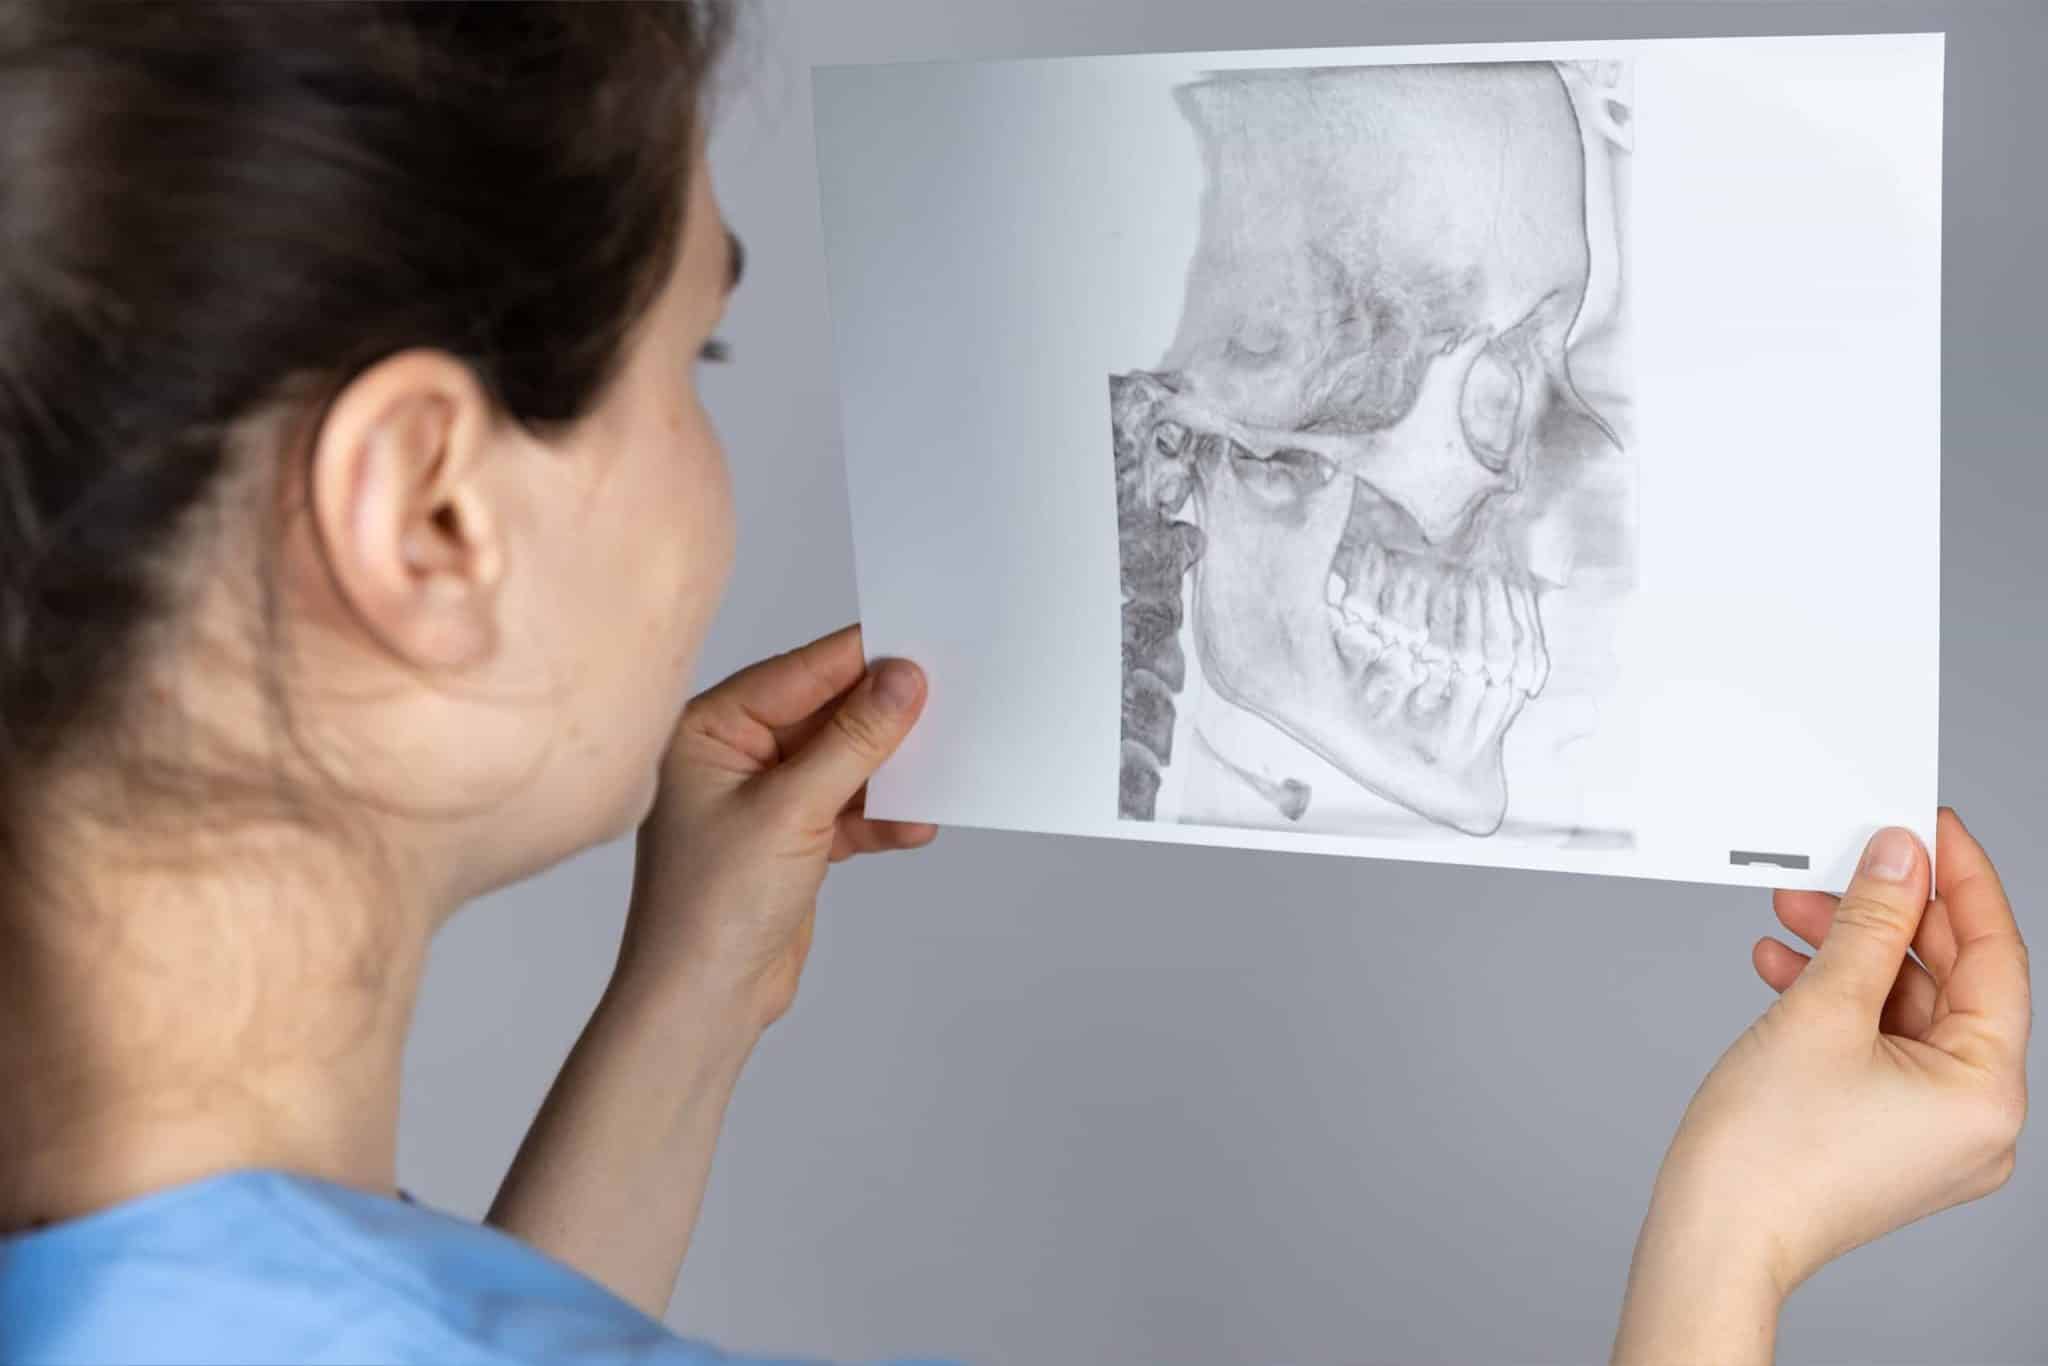 A woman looking at a CT scan of a temporomandibular joint.